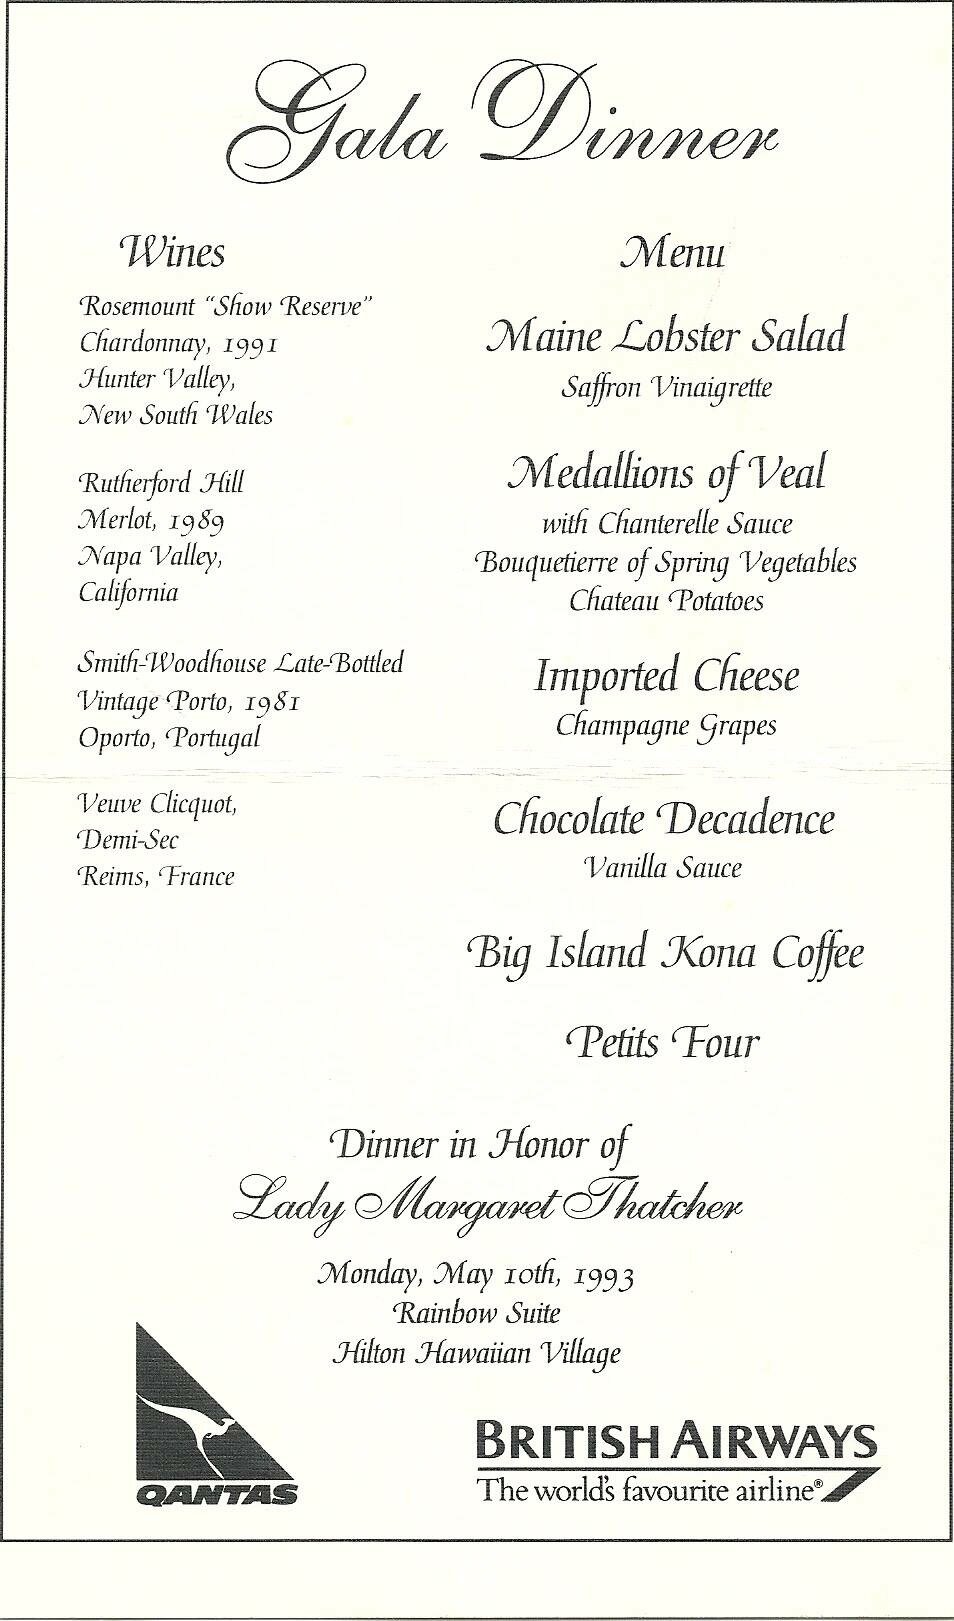 1993: Gala Dinner Menu in honor of Lady Margaret Thatcher